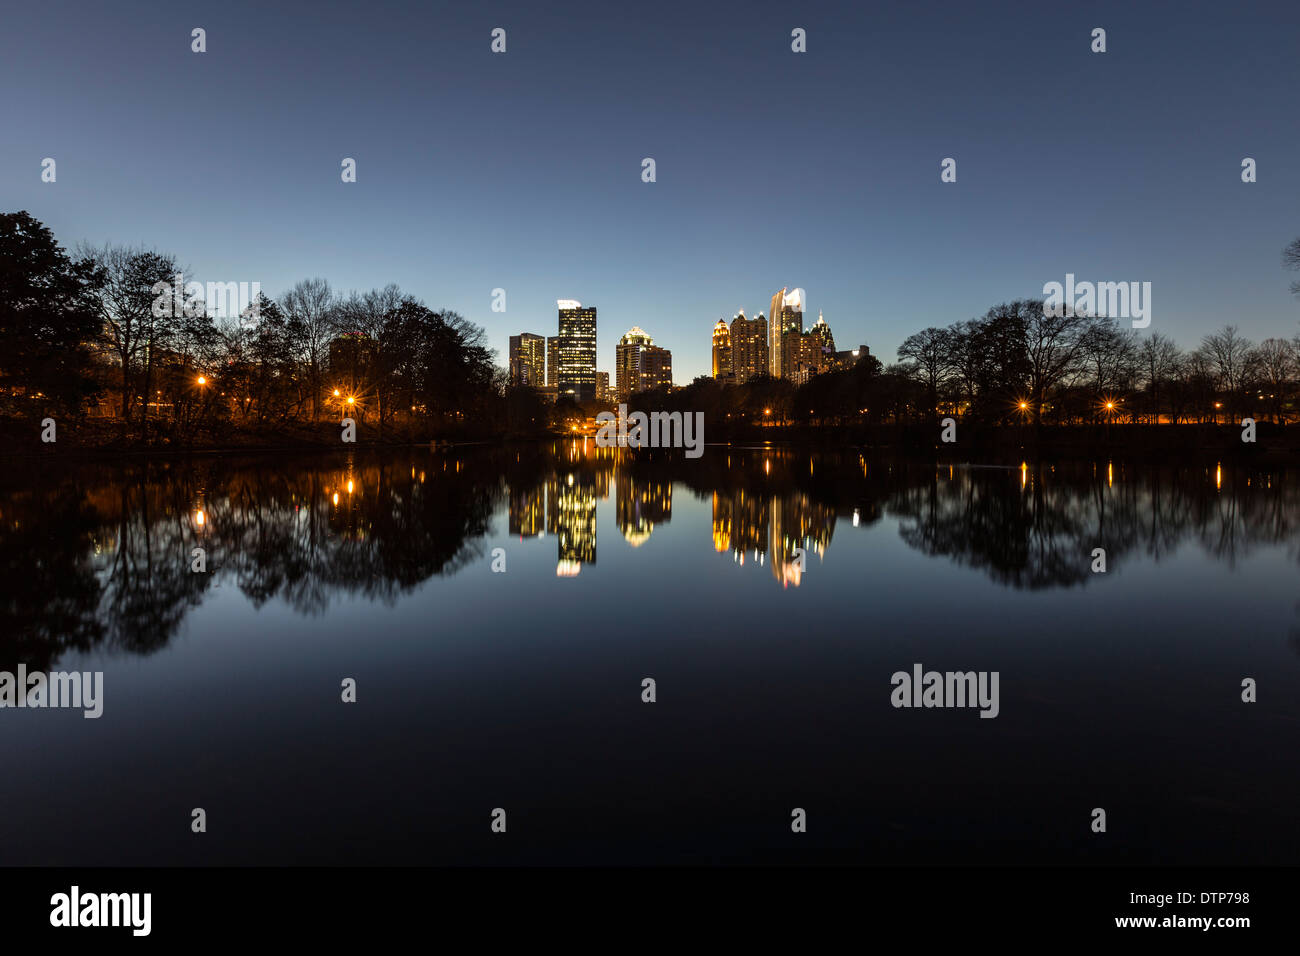 Midtown Atlanta notte riflessa nel lago a popolare il parco piemontese. Foto Stock